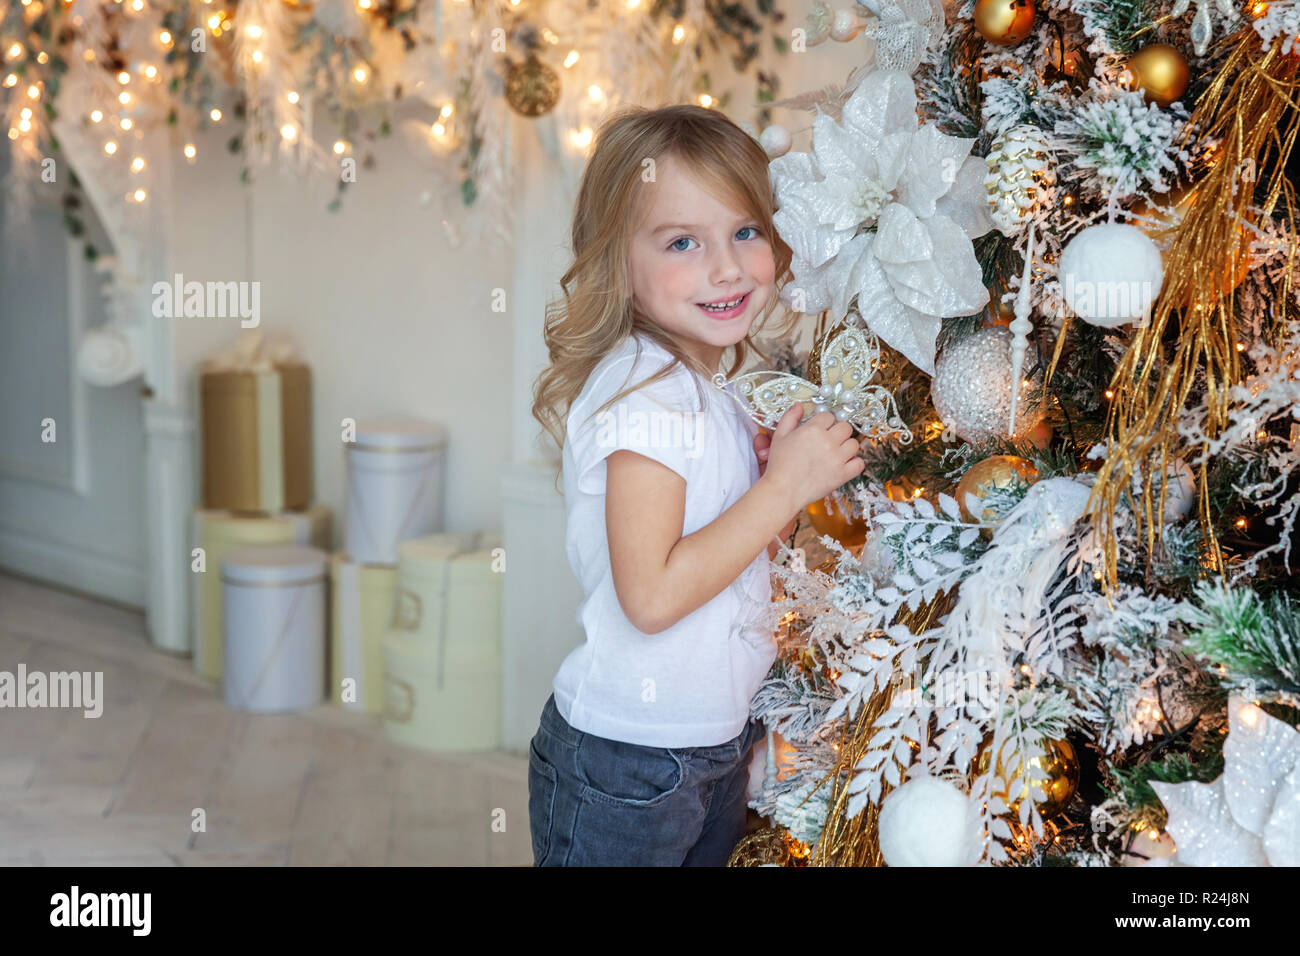 Little Girl Decorating Christmas Tree On Christmas Eve At